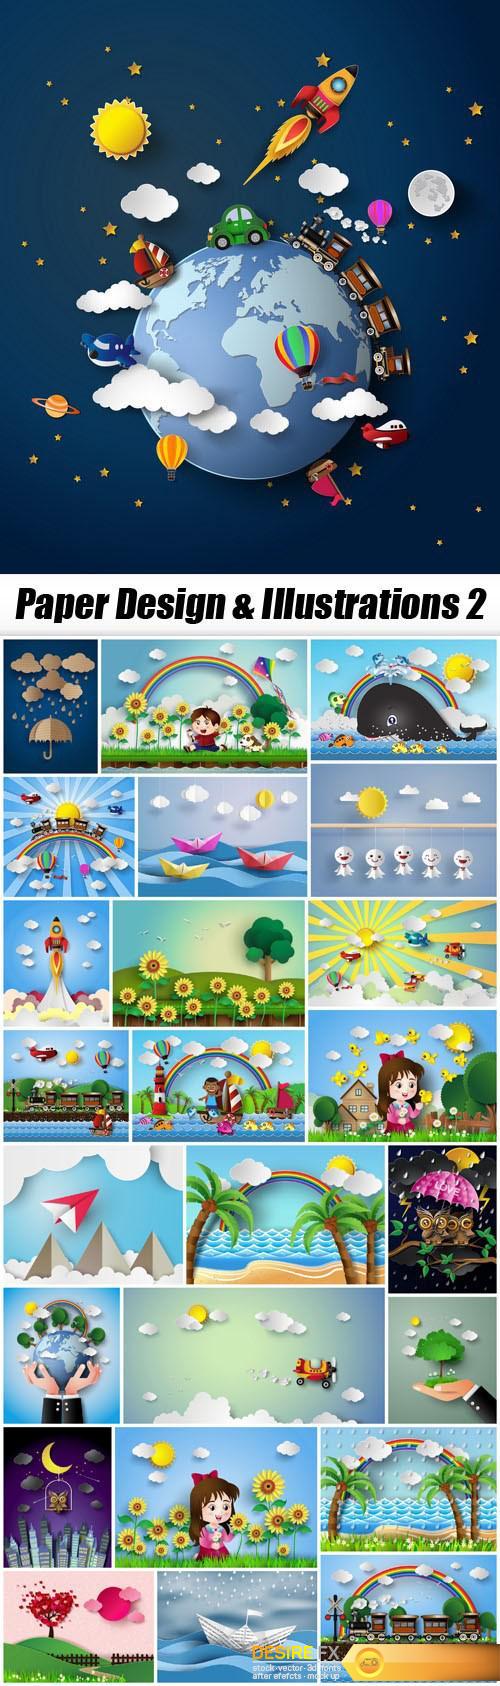 Paper Design & Illustrations 2